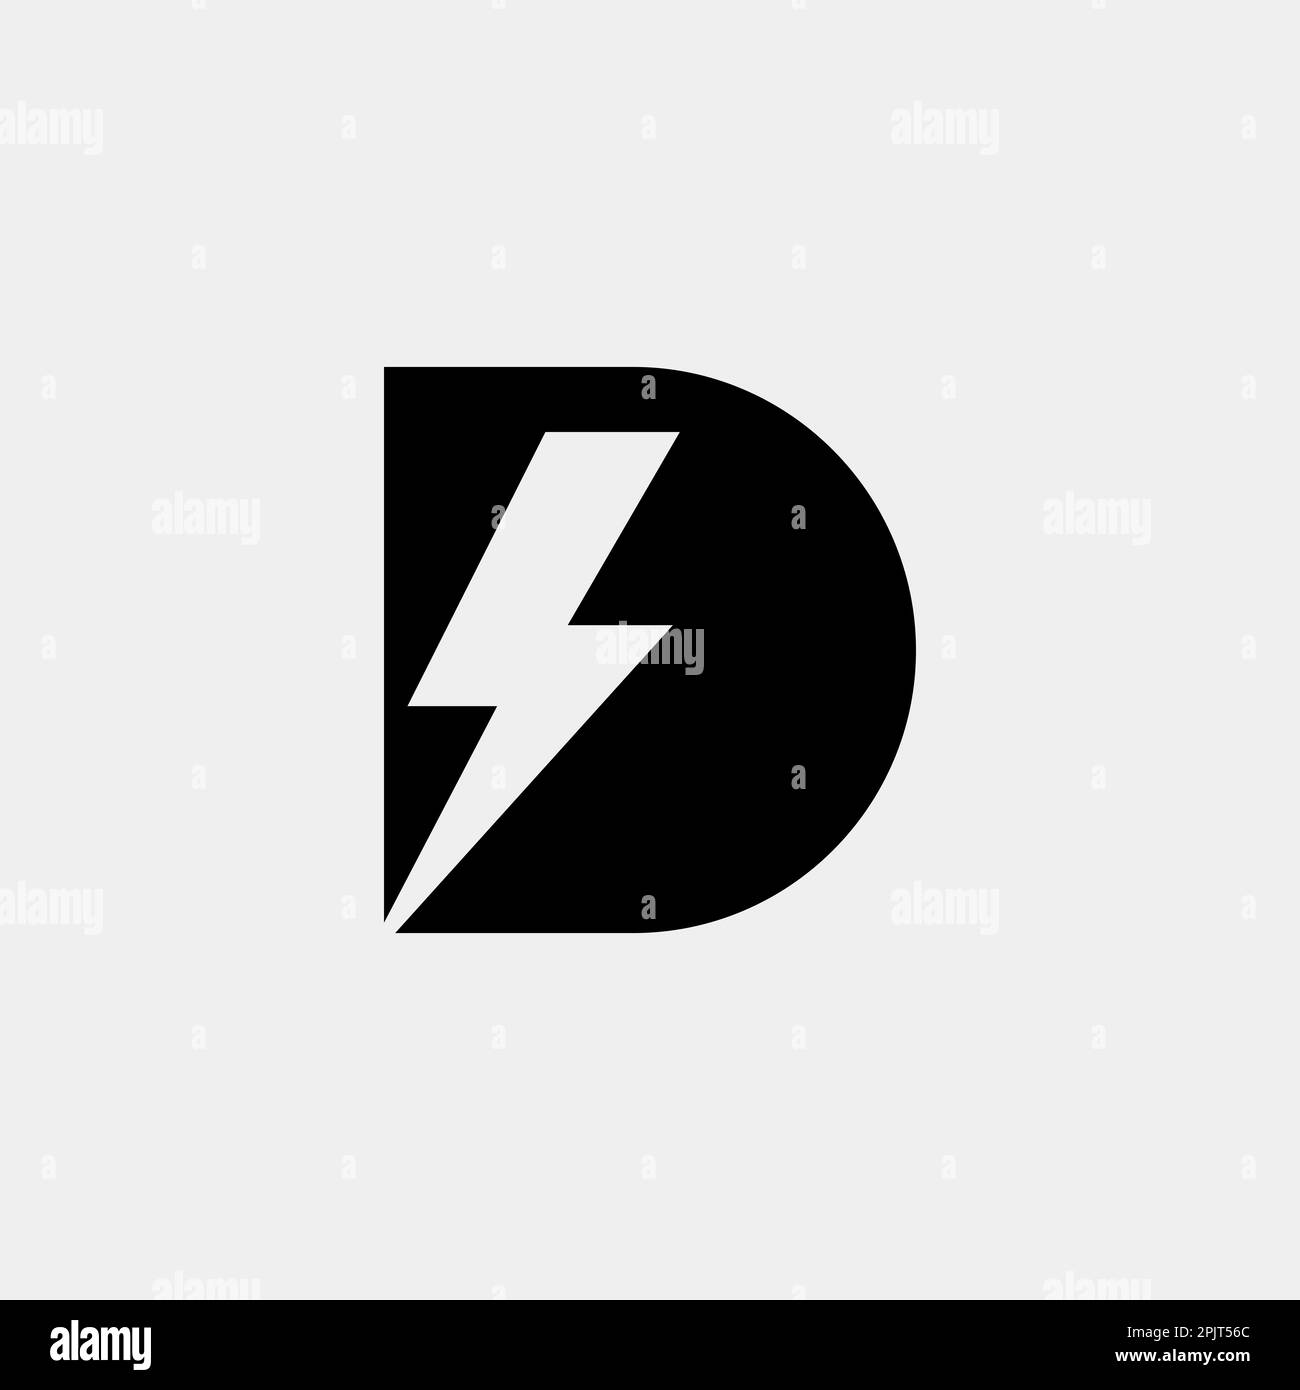 D Letter Logo With Lightning Thunder Bolt Vector Design. Electric Bolt ...